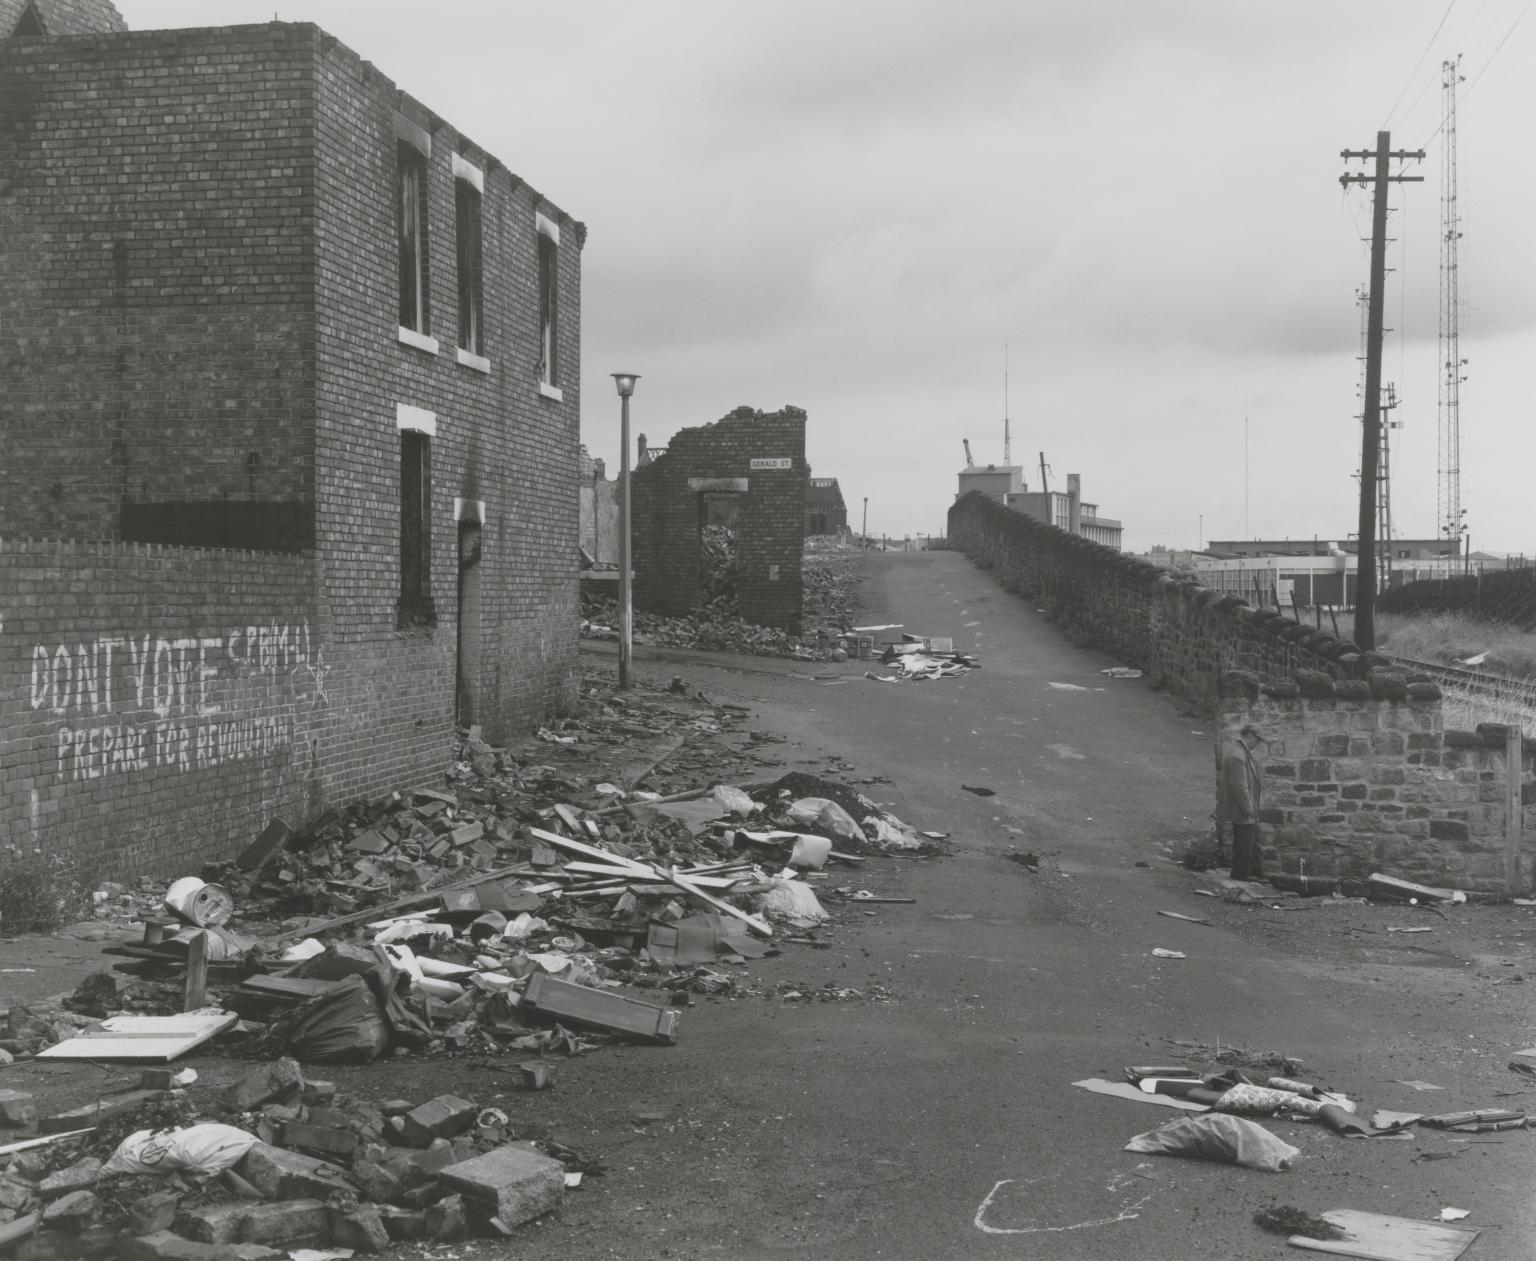 P81037: Demolished housing, Wallsend, Tyneside